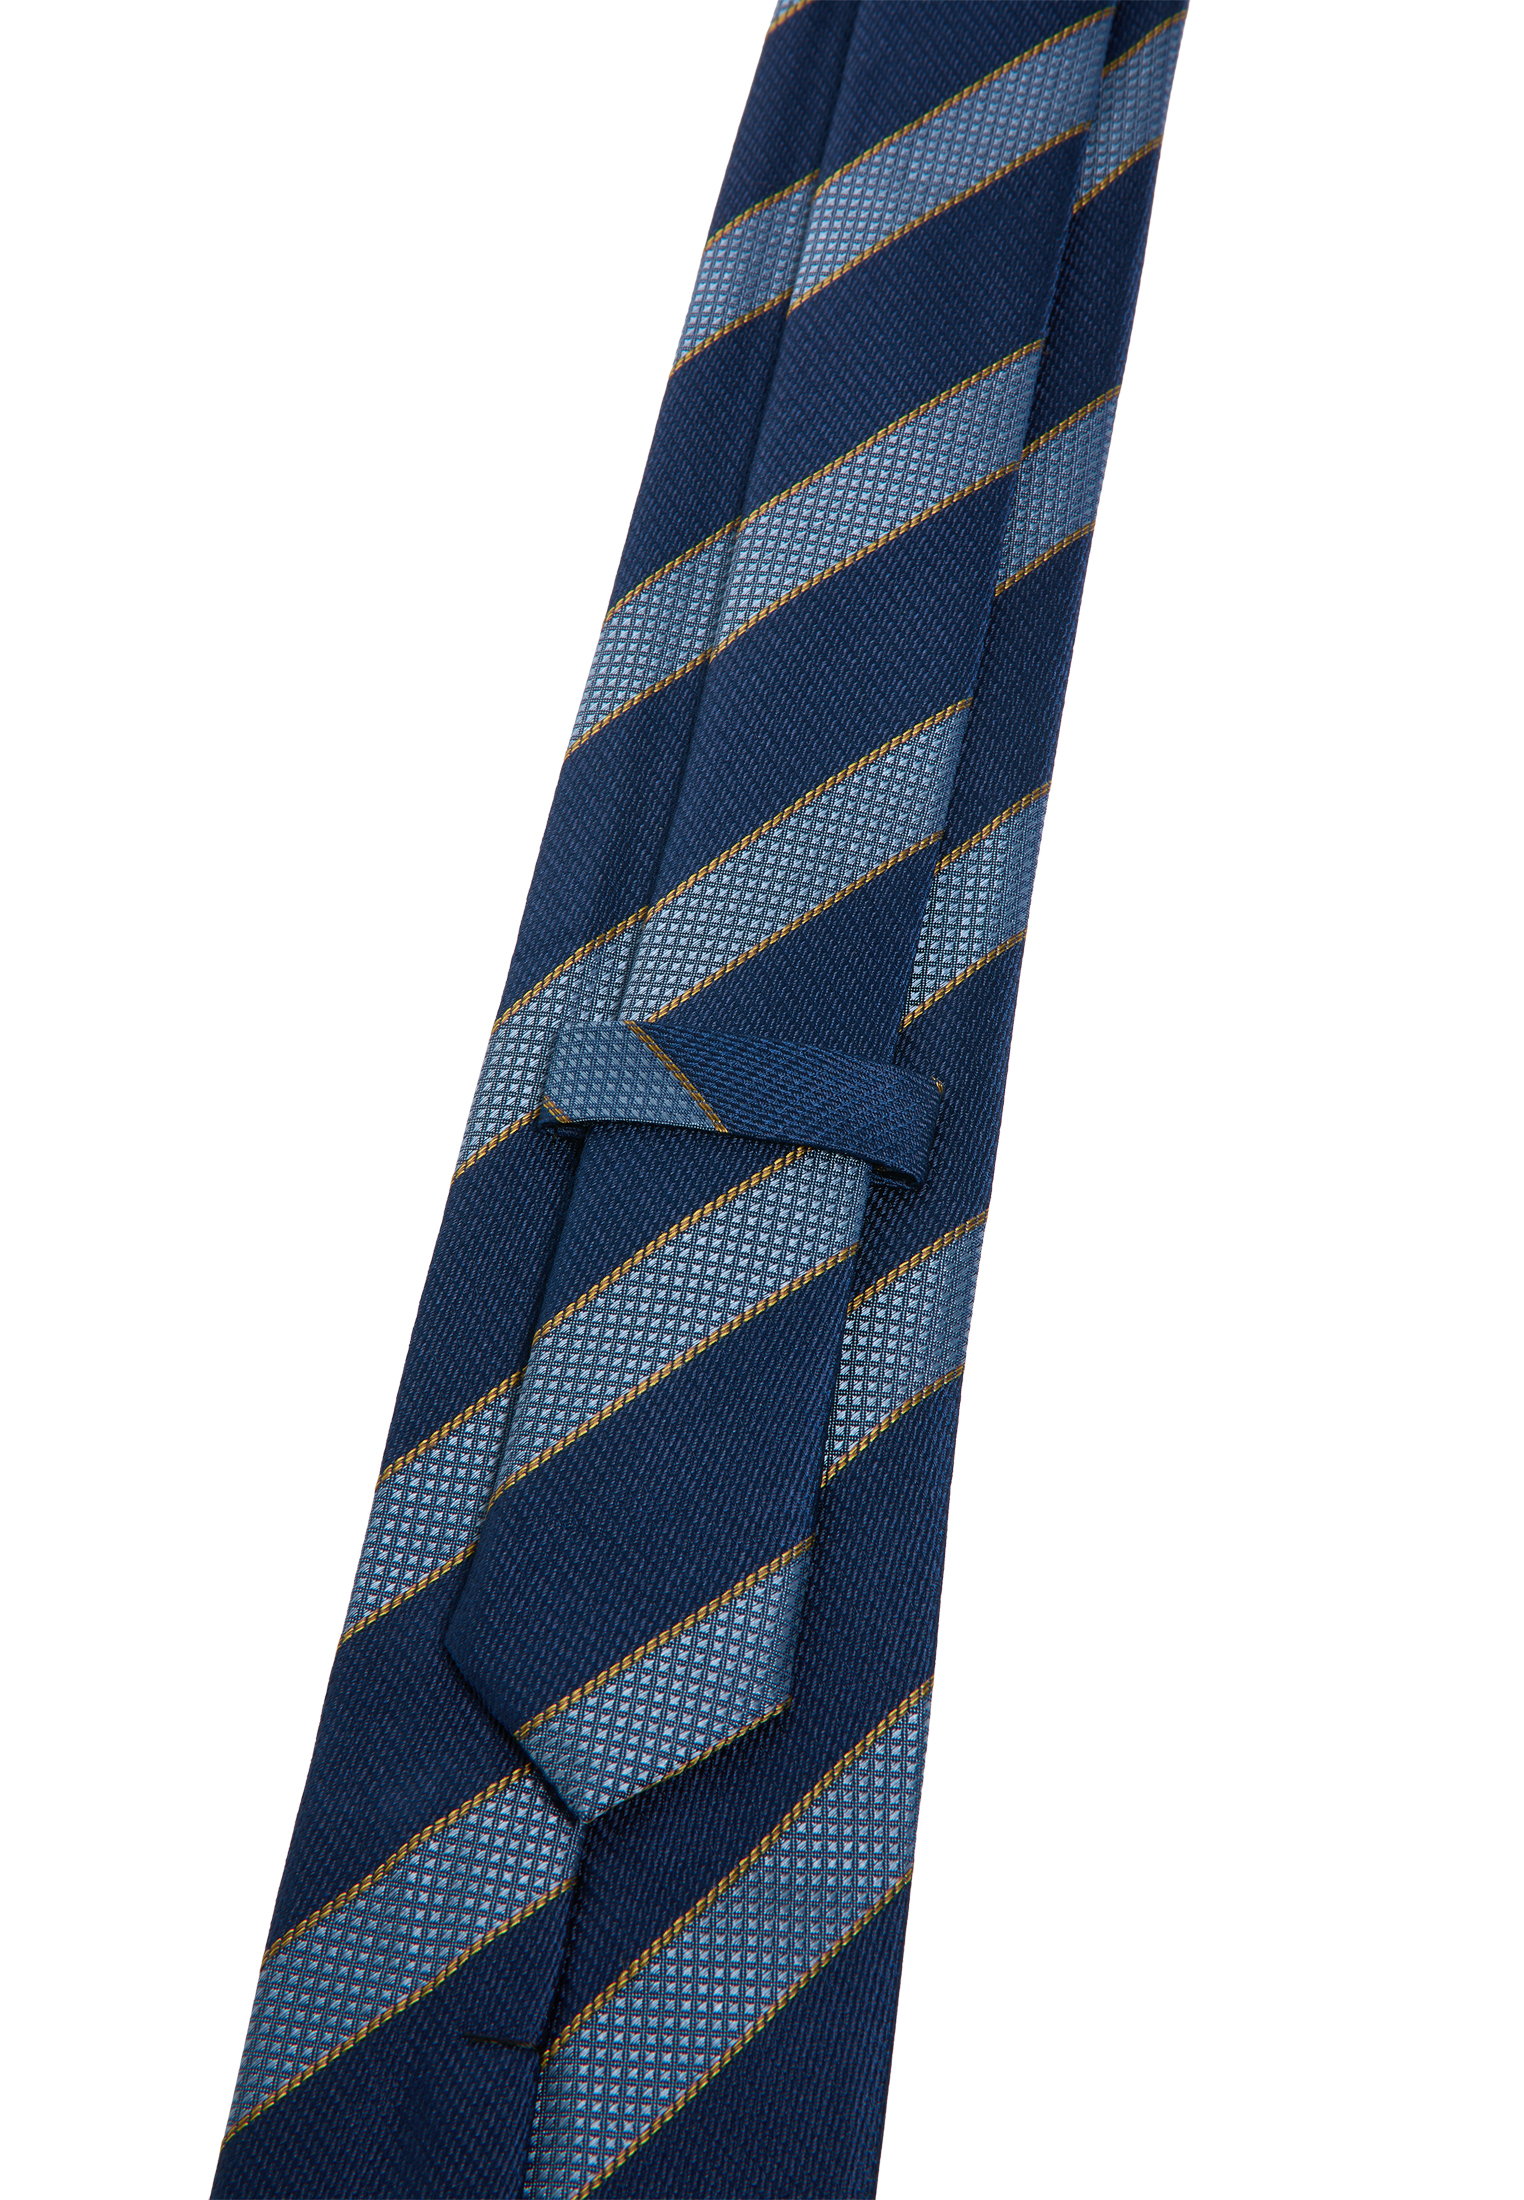 | 1AC01903-01-81-142 dunkelblau Krawatte gestreift dunkelblau | 142 | in